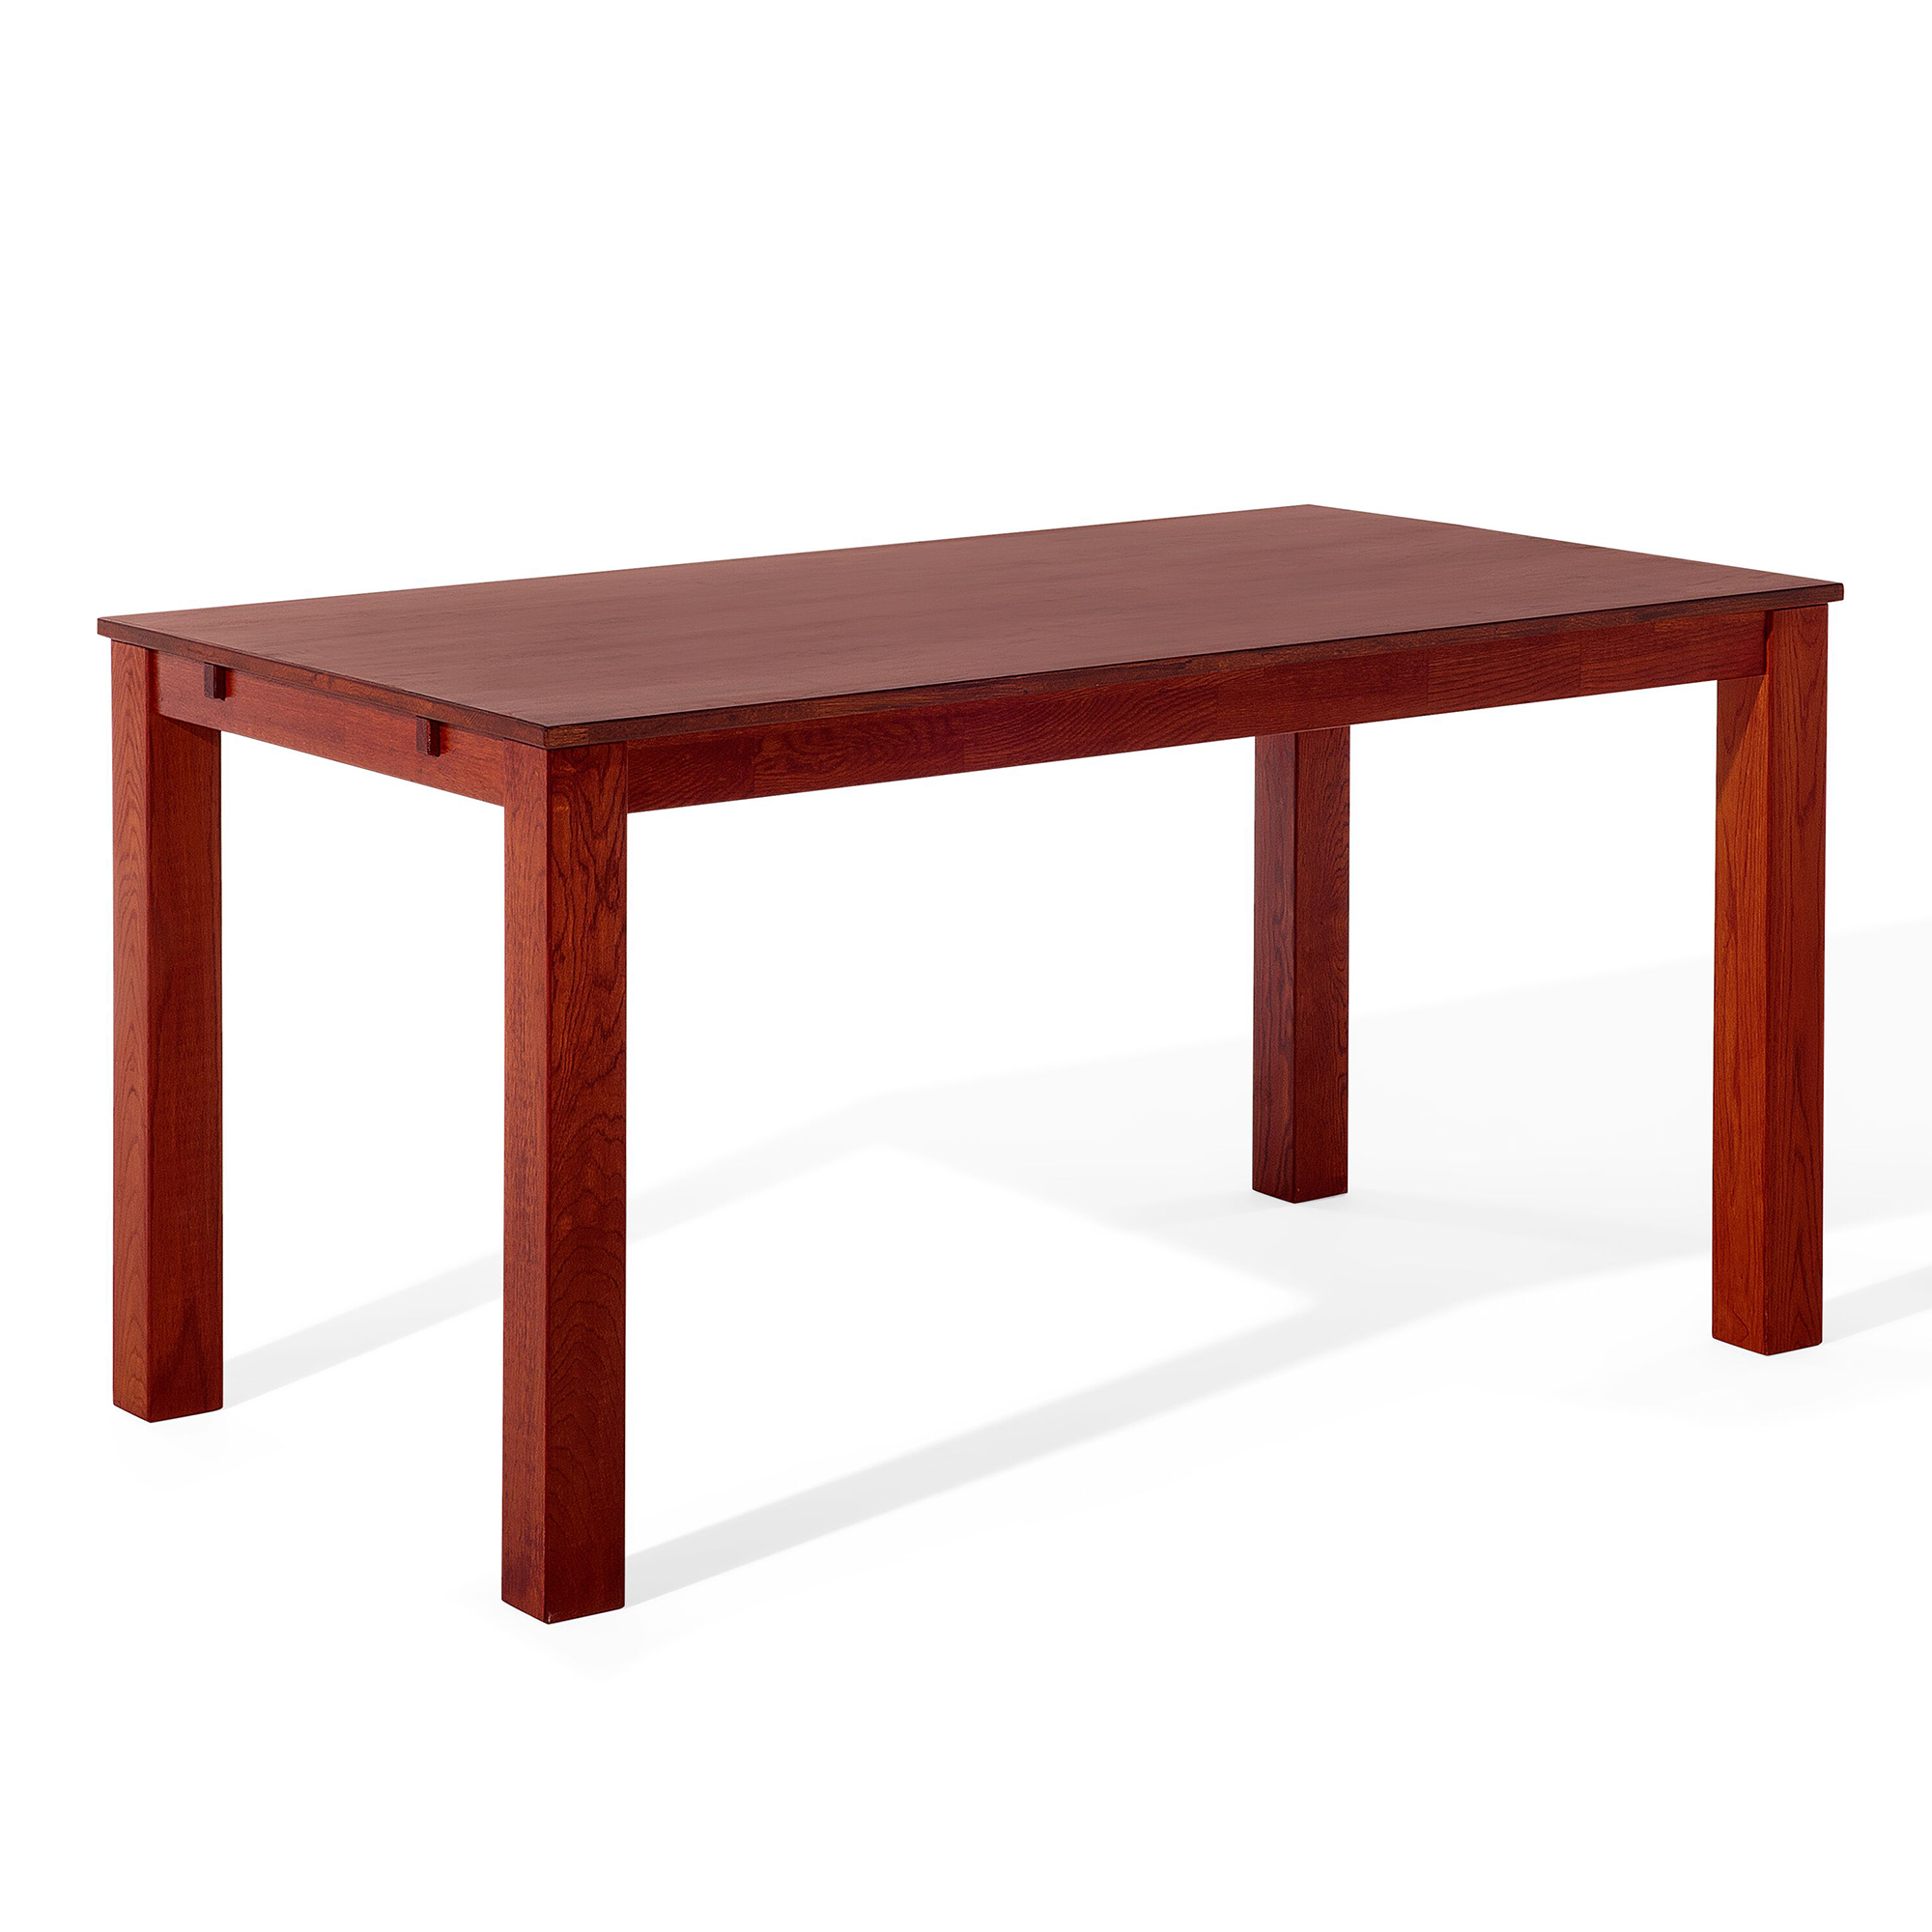 Beliani Dining Table Dark Red Solid Oak Wood 150 x 85 cm Scandinavian Rustic Furniture